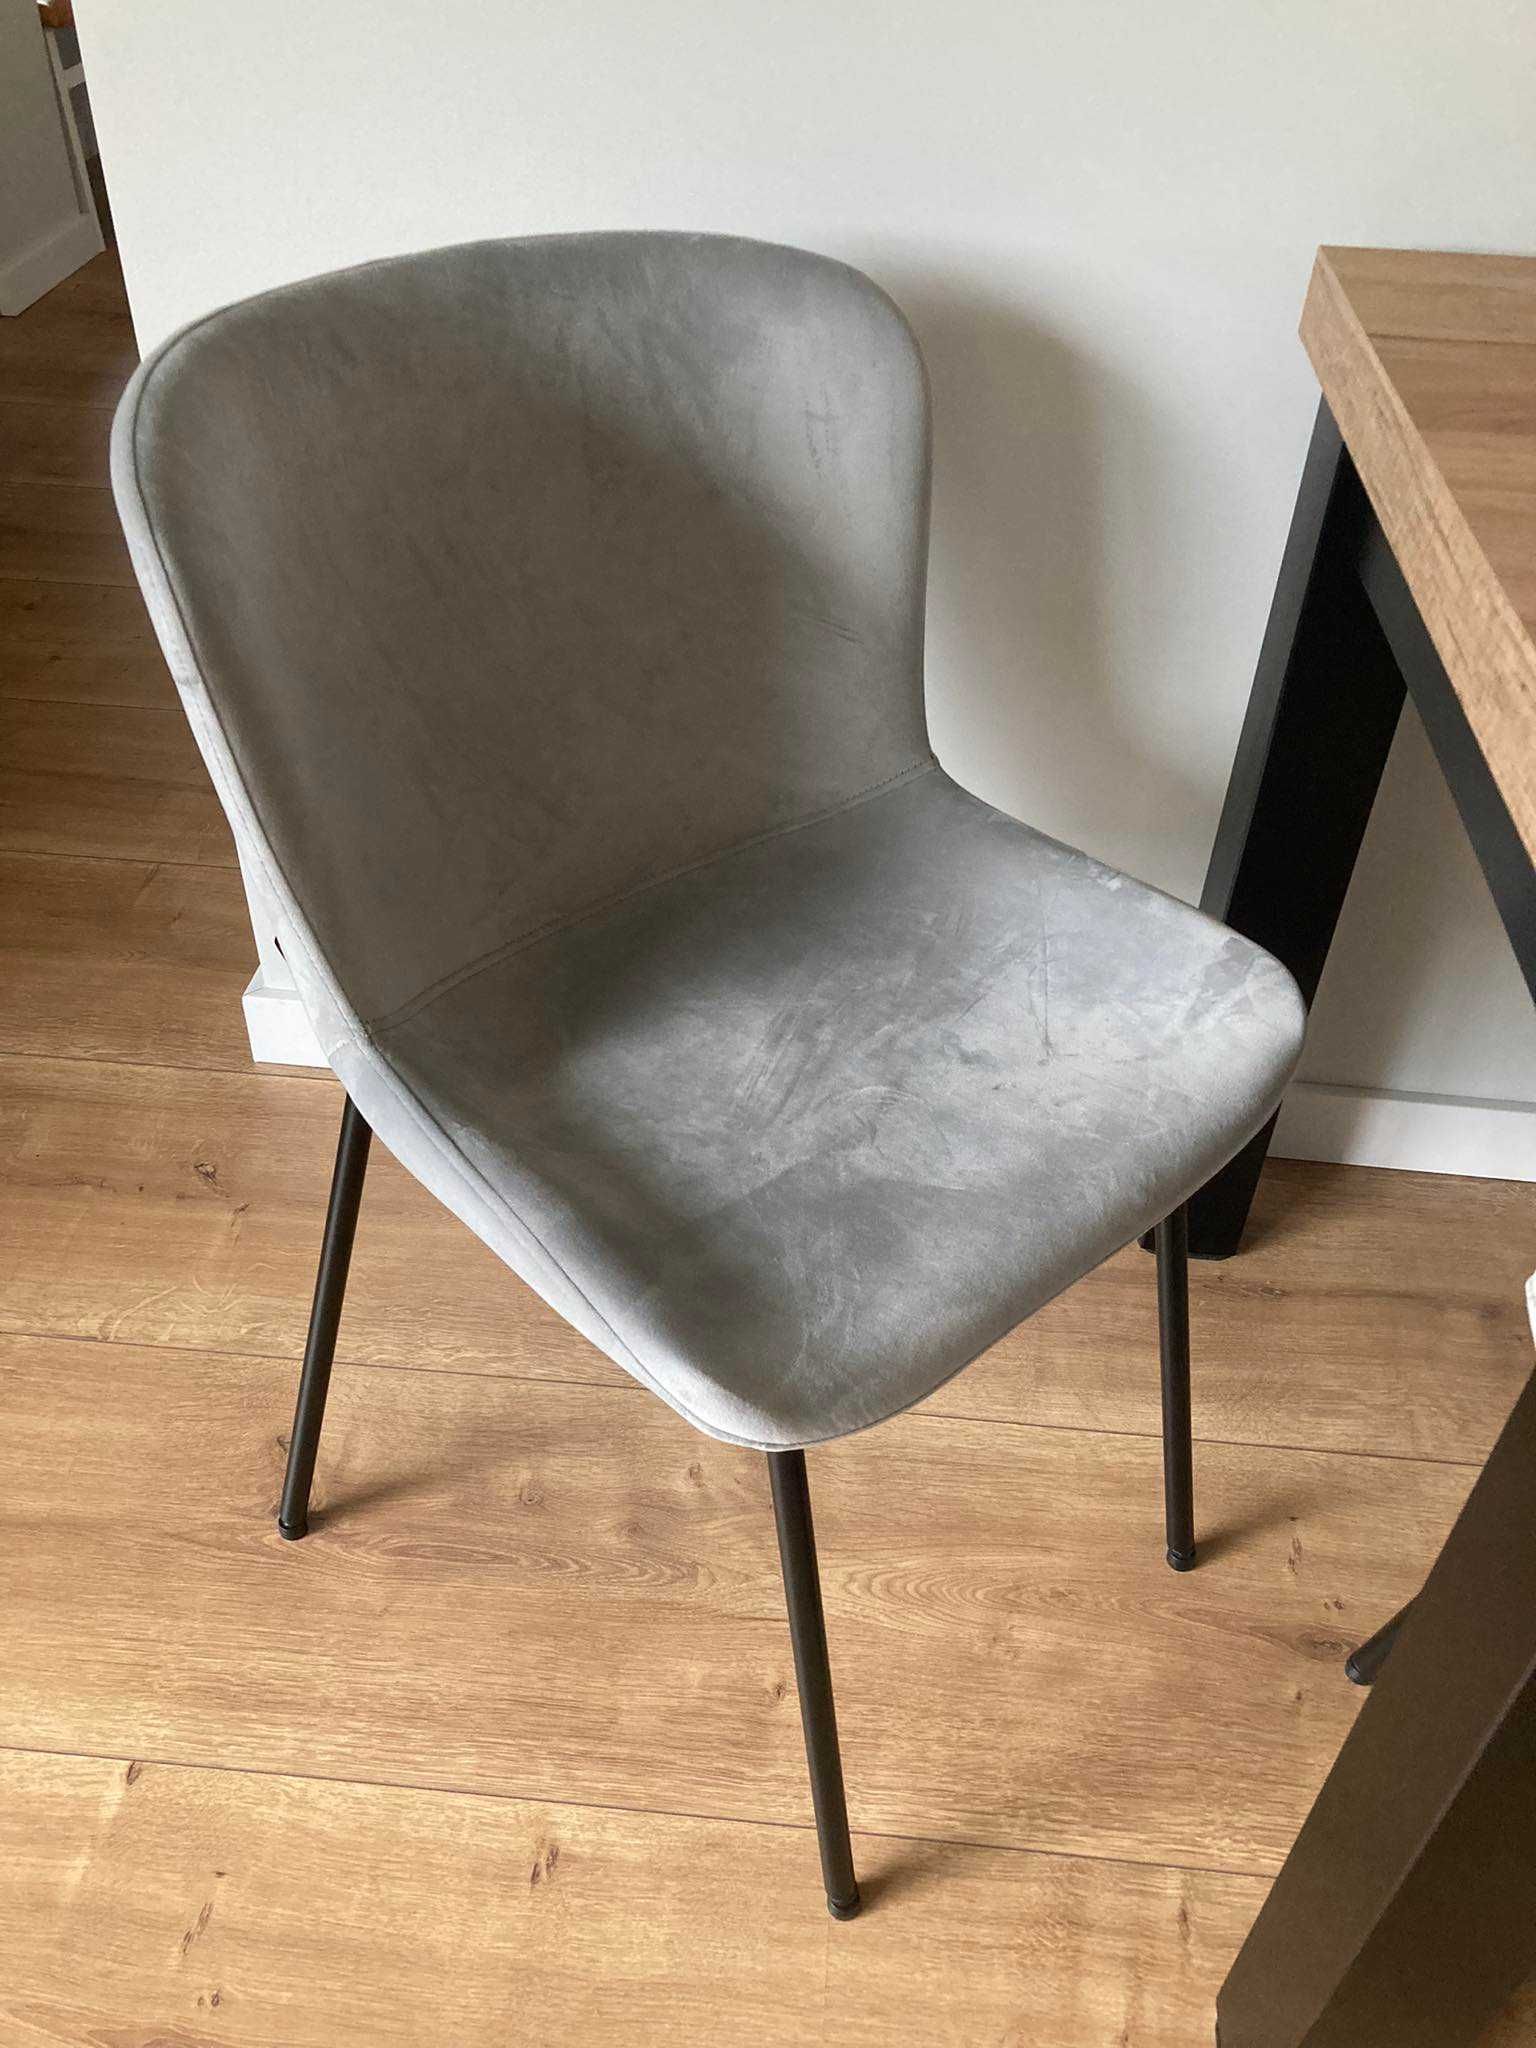 Krzesła komplet do jadalni salonu szare czarne metalowe nogi loft